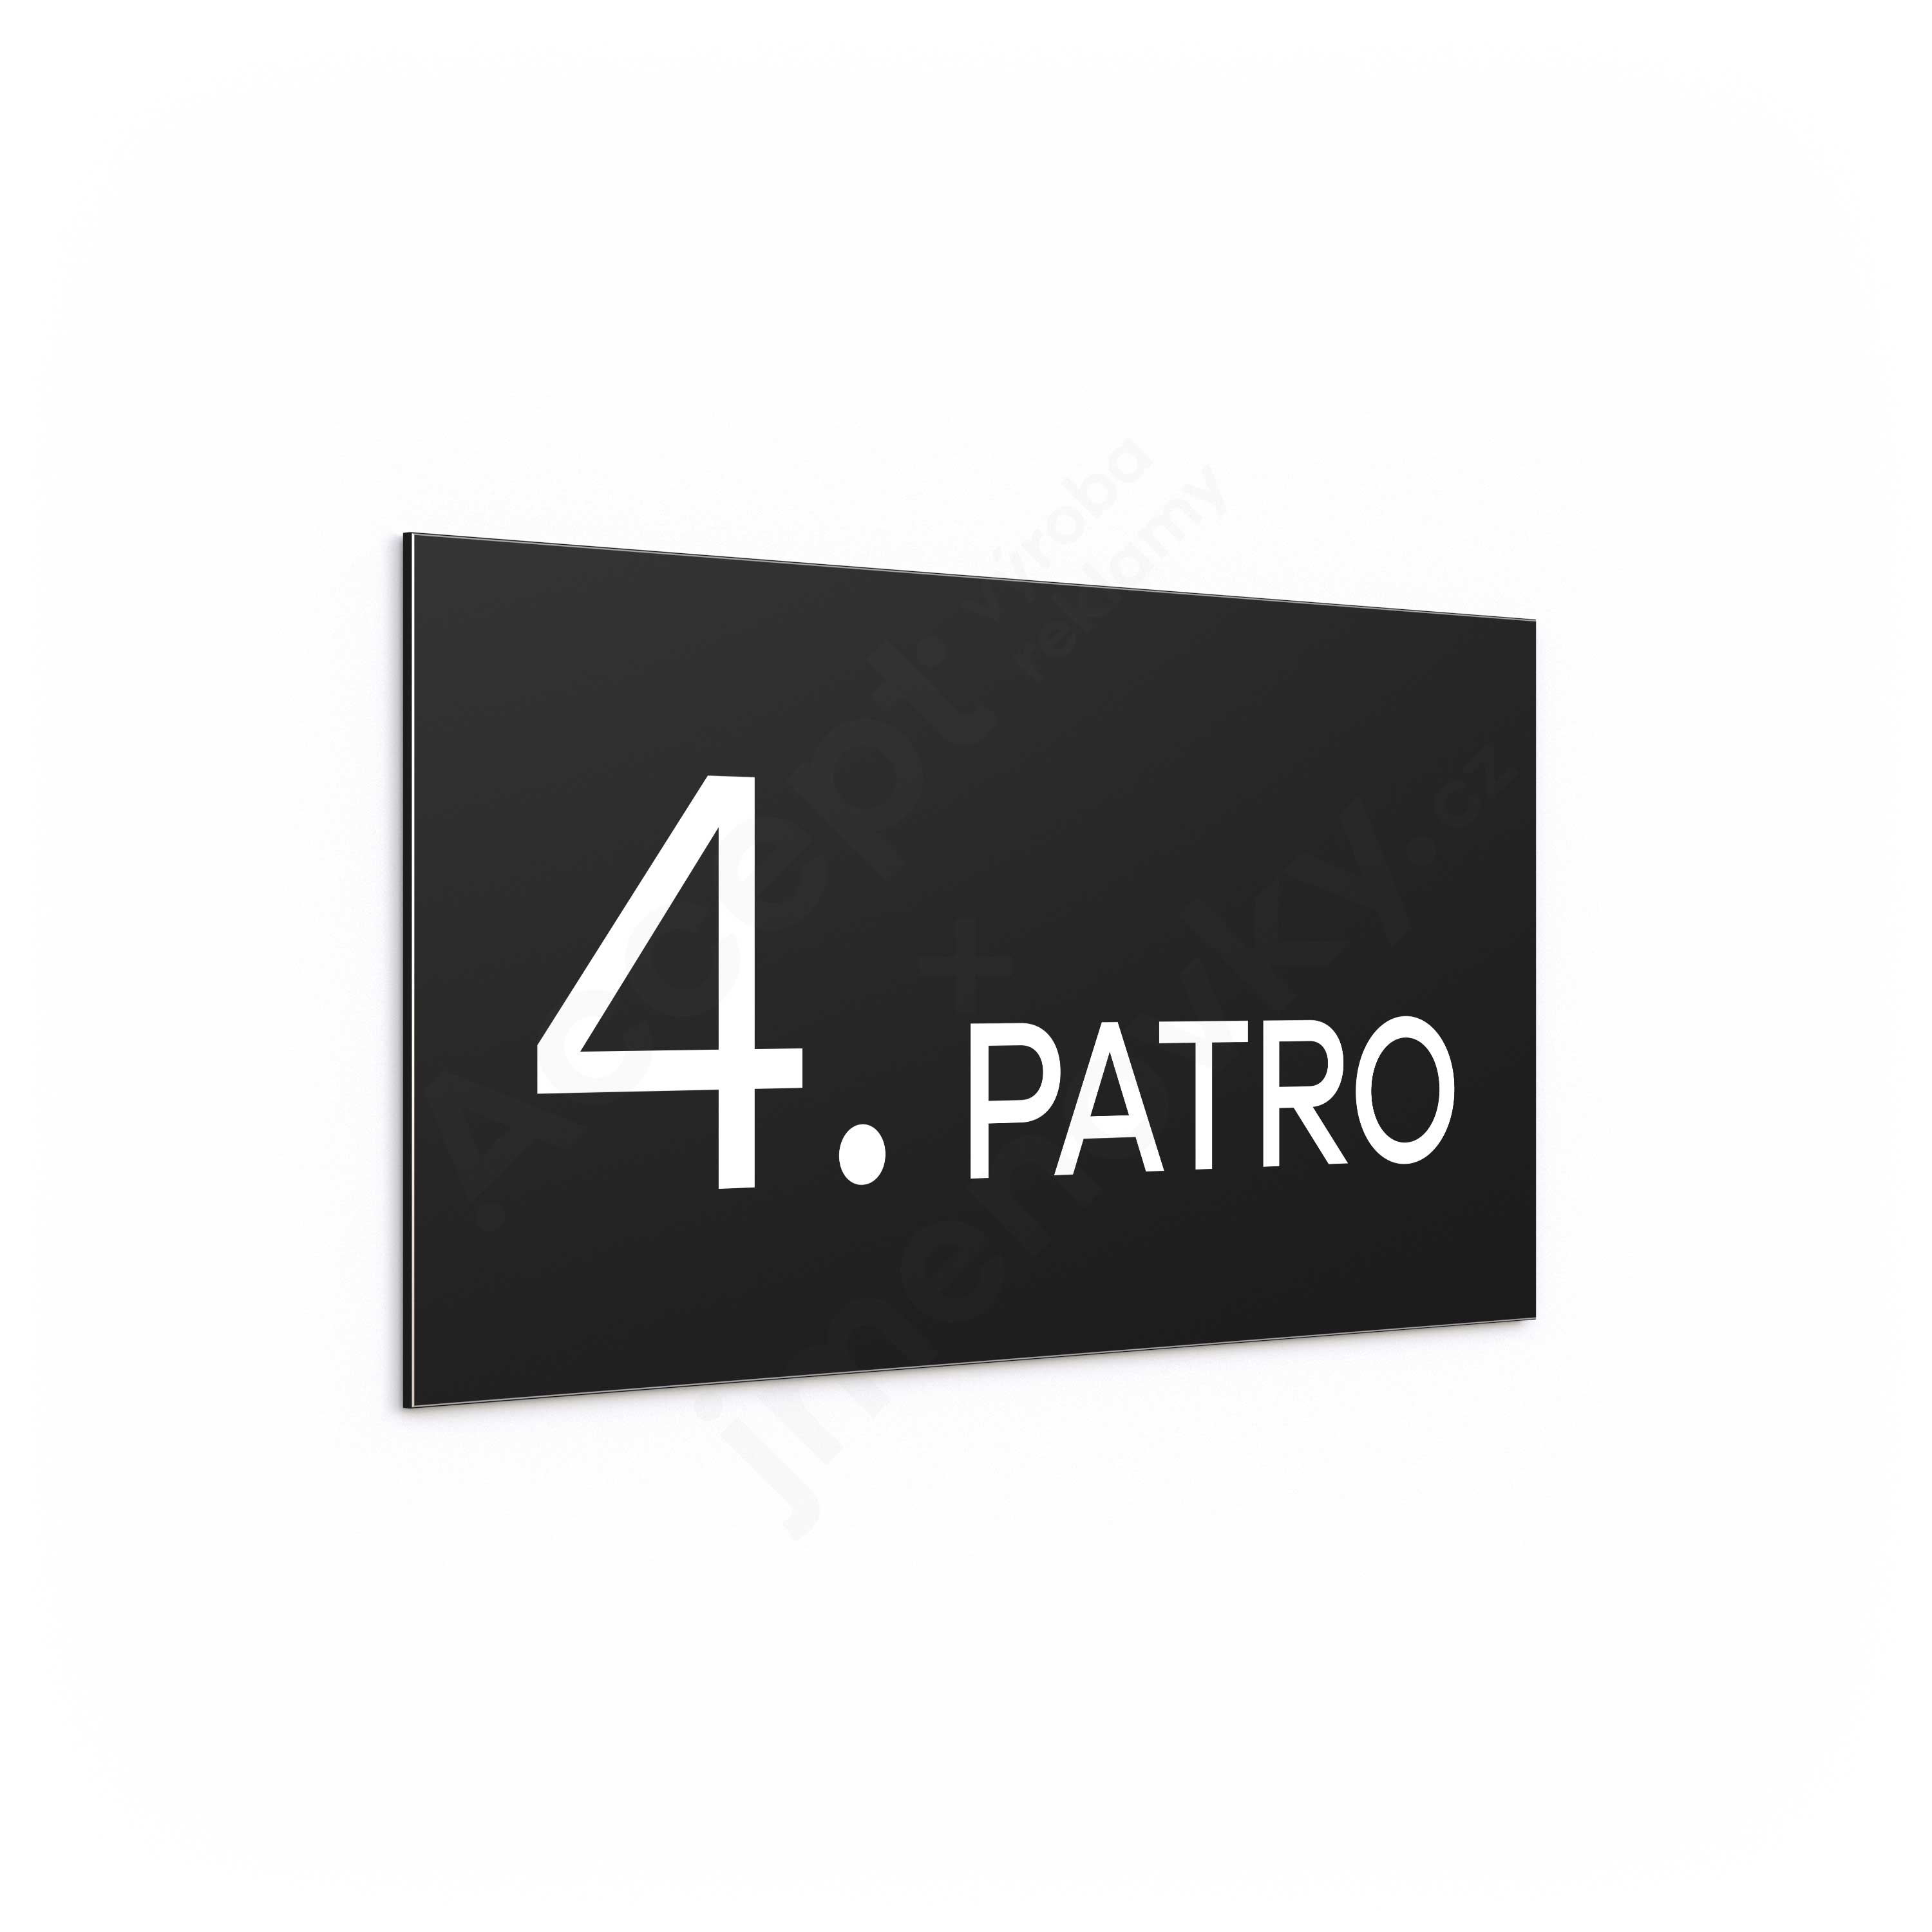 Označení podlaží "4. PATRO" - černá tabulka - bílý popis